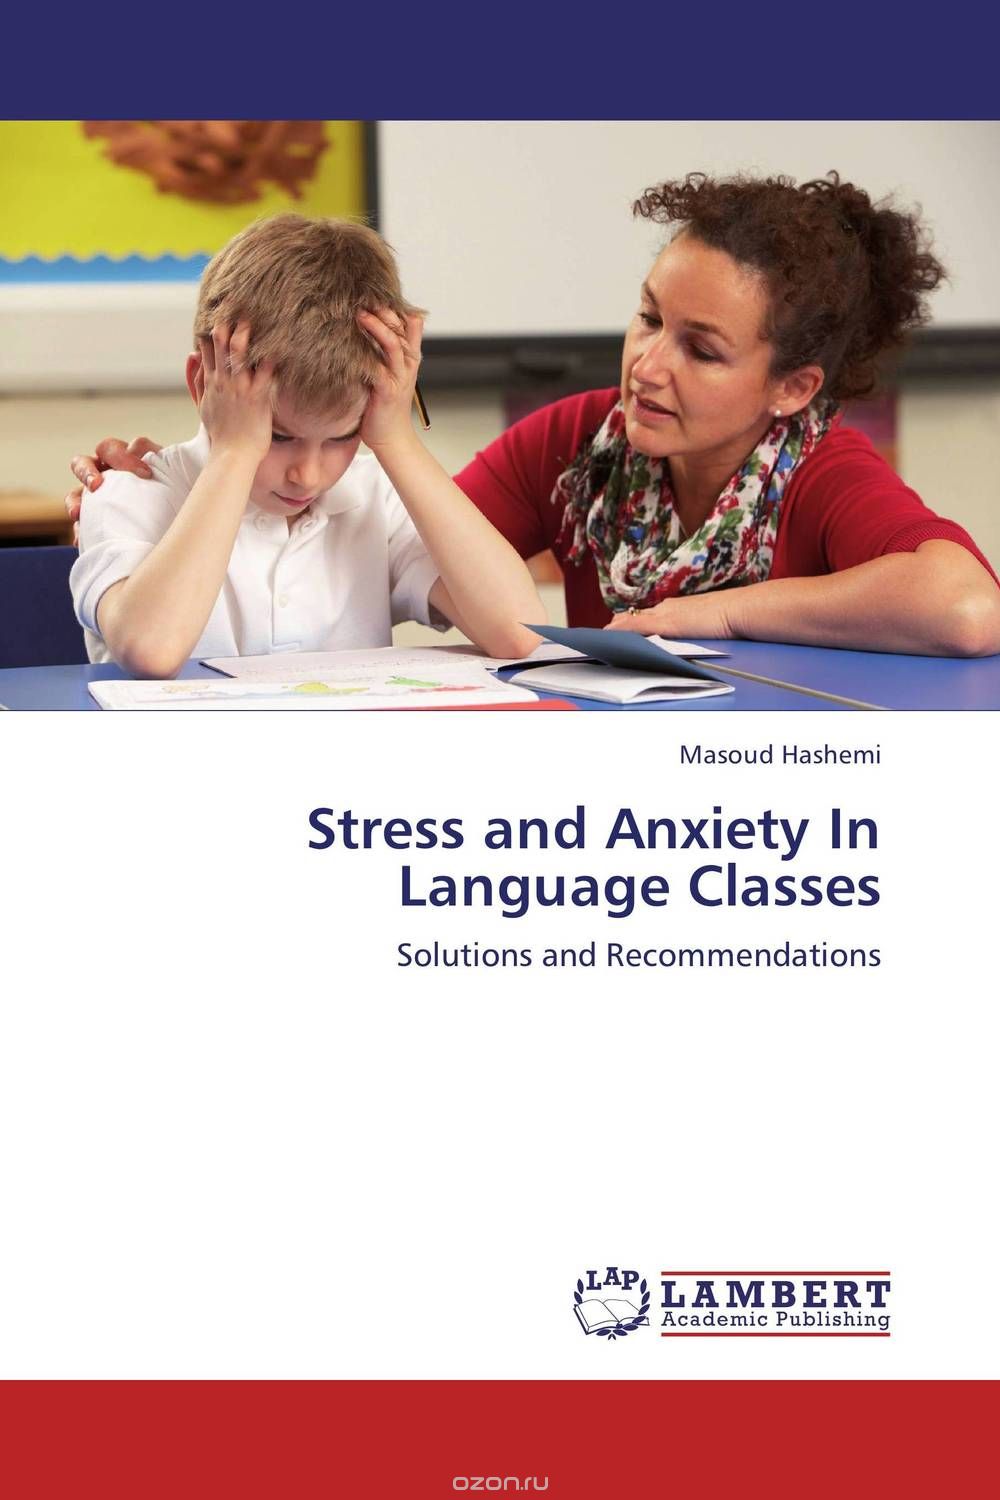 Скачать книгу "Stress and Anxiety In Language Classes"